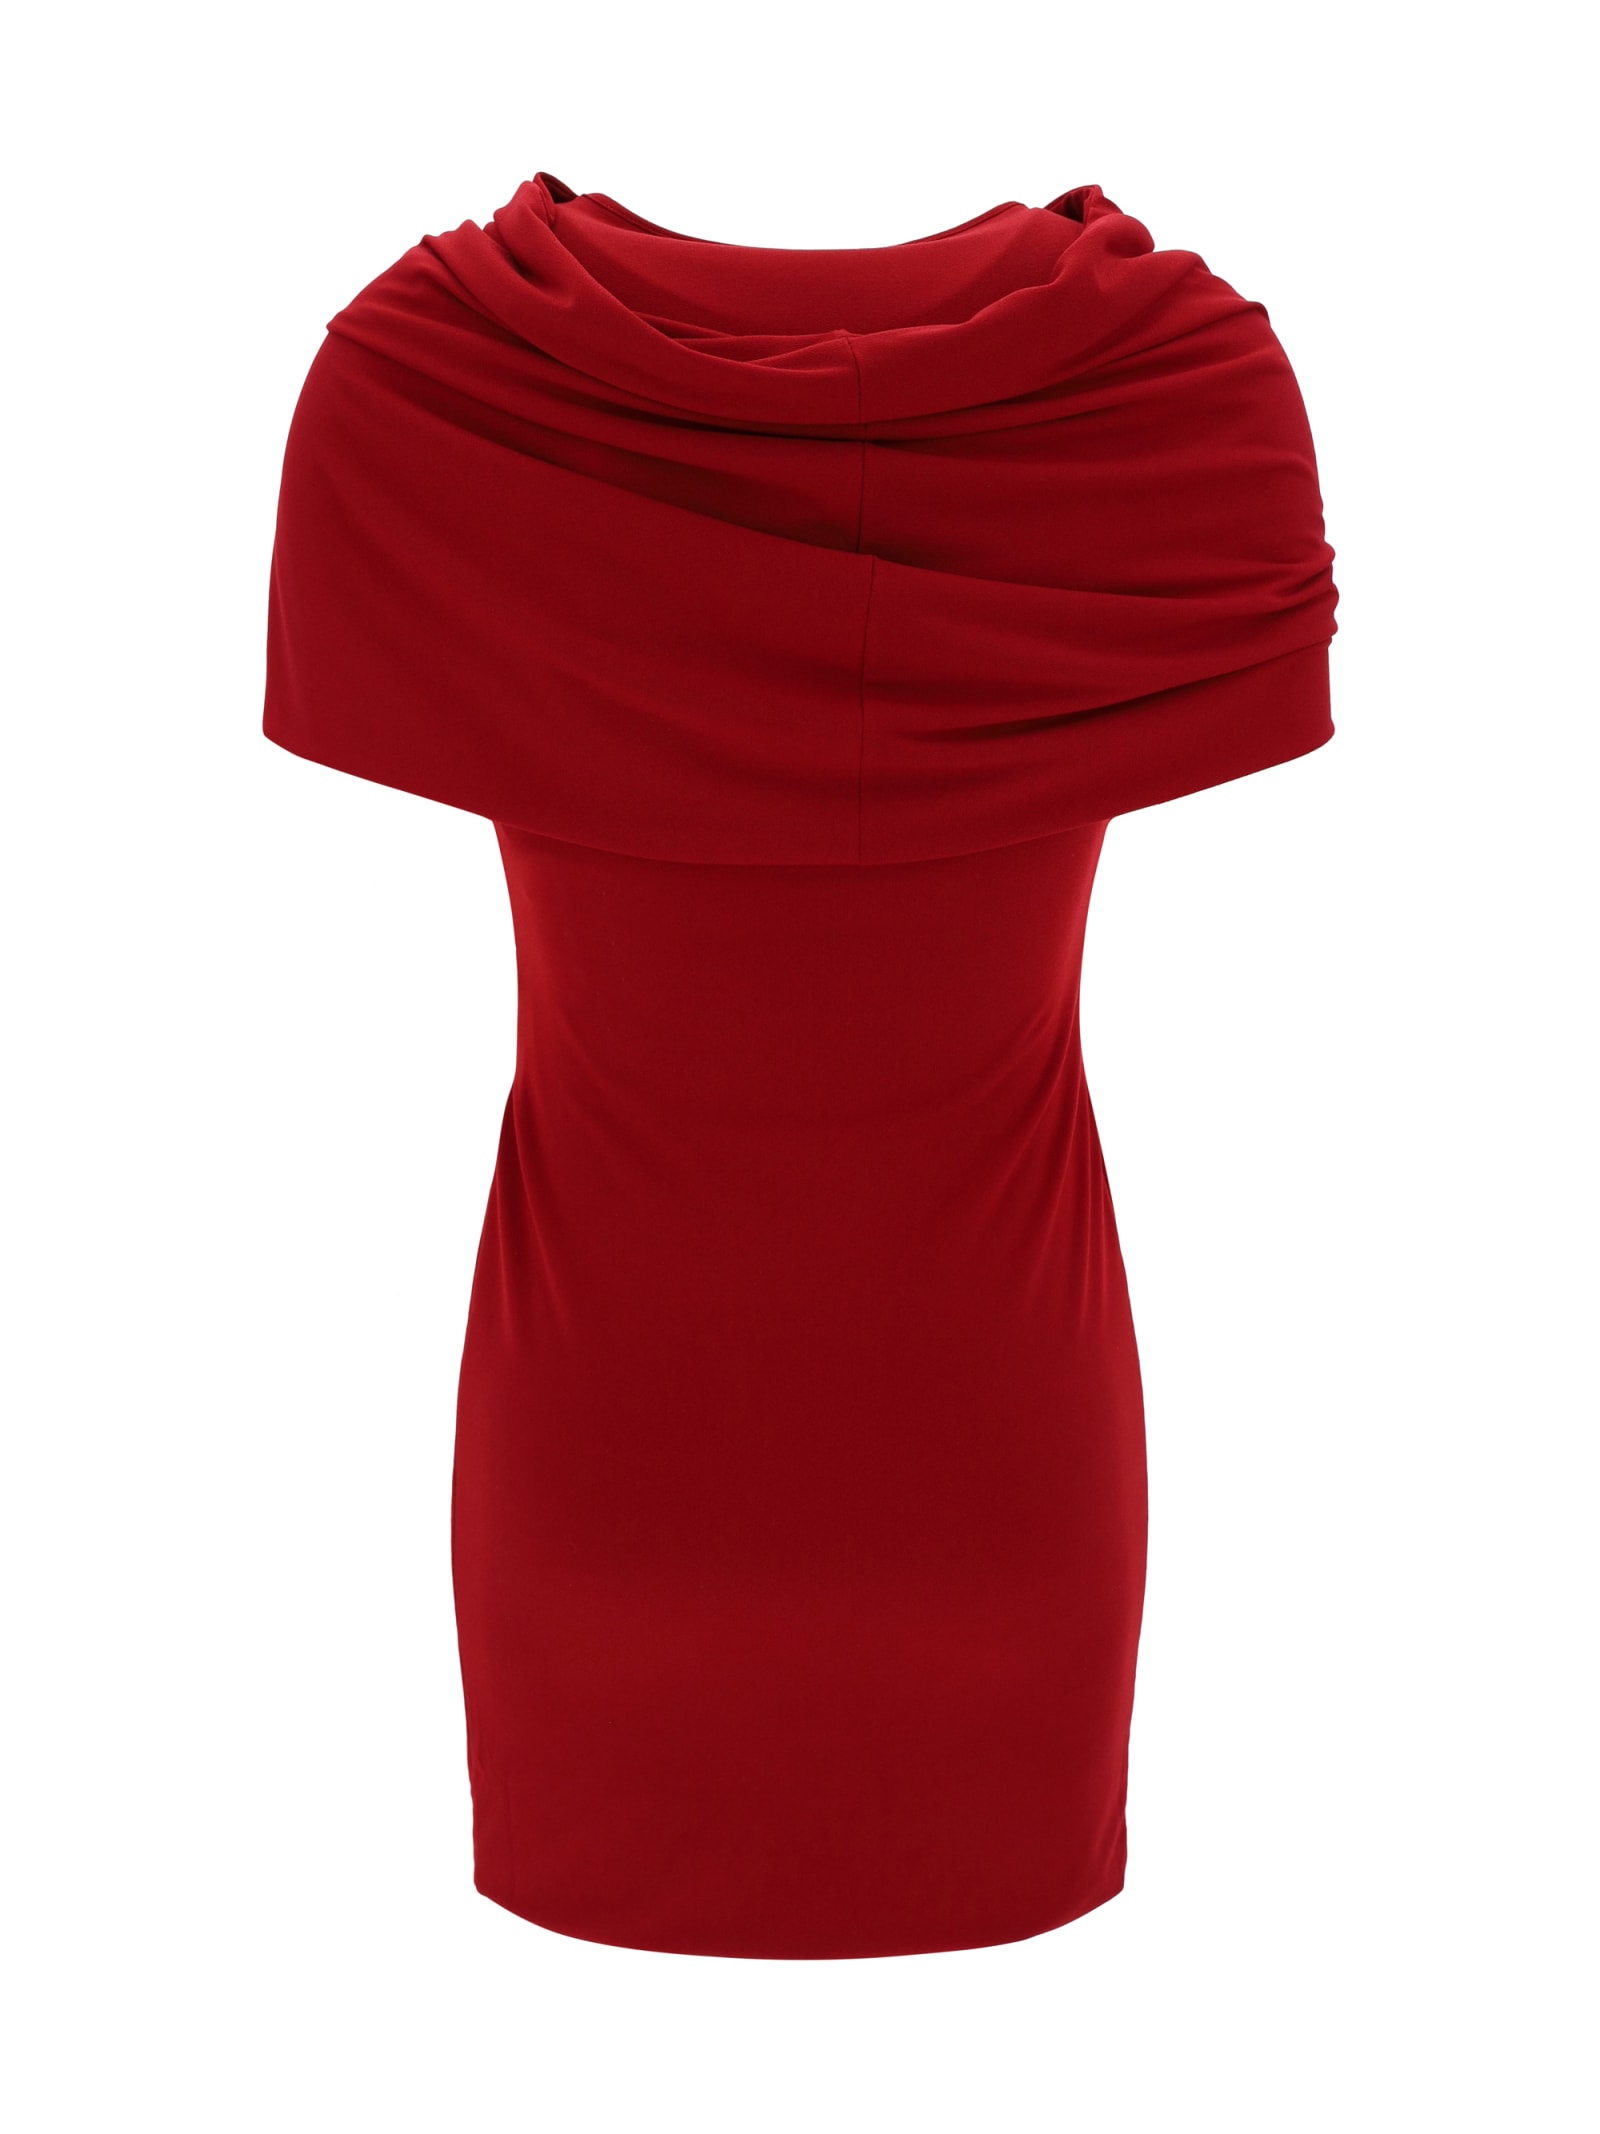 Shop The Andamane Nikita Hooded Mini Dress In Ruby